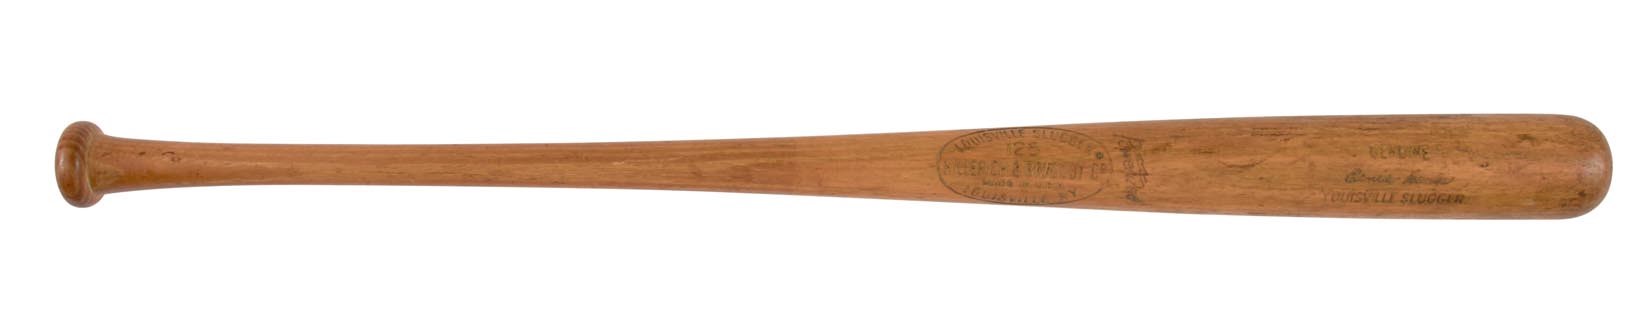 - 1965-68 Ernie Banks Game Used Bat